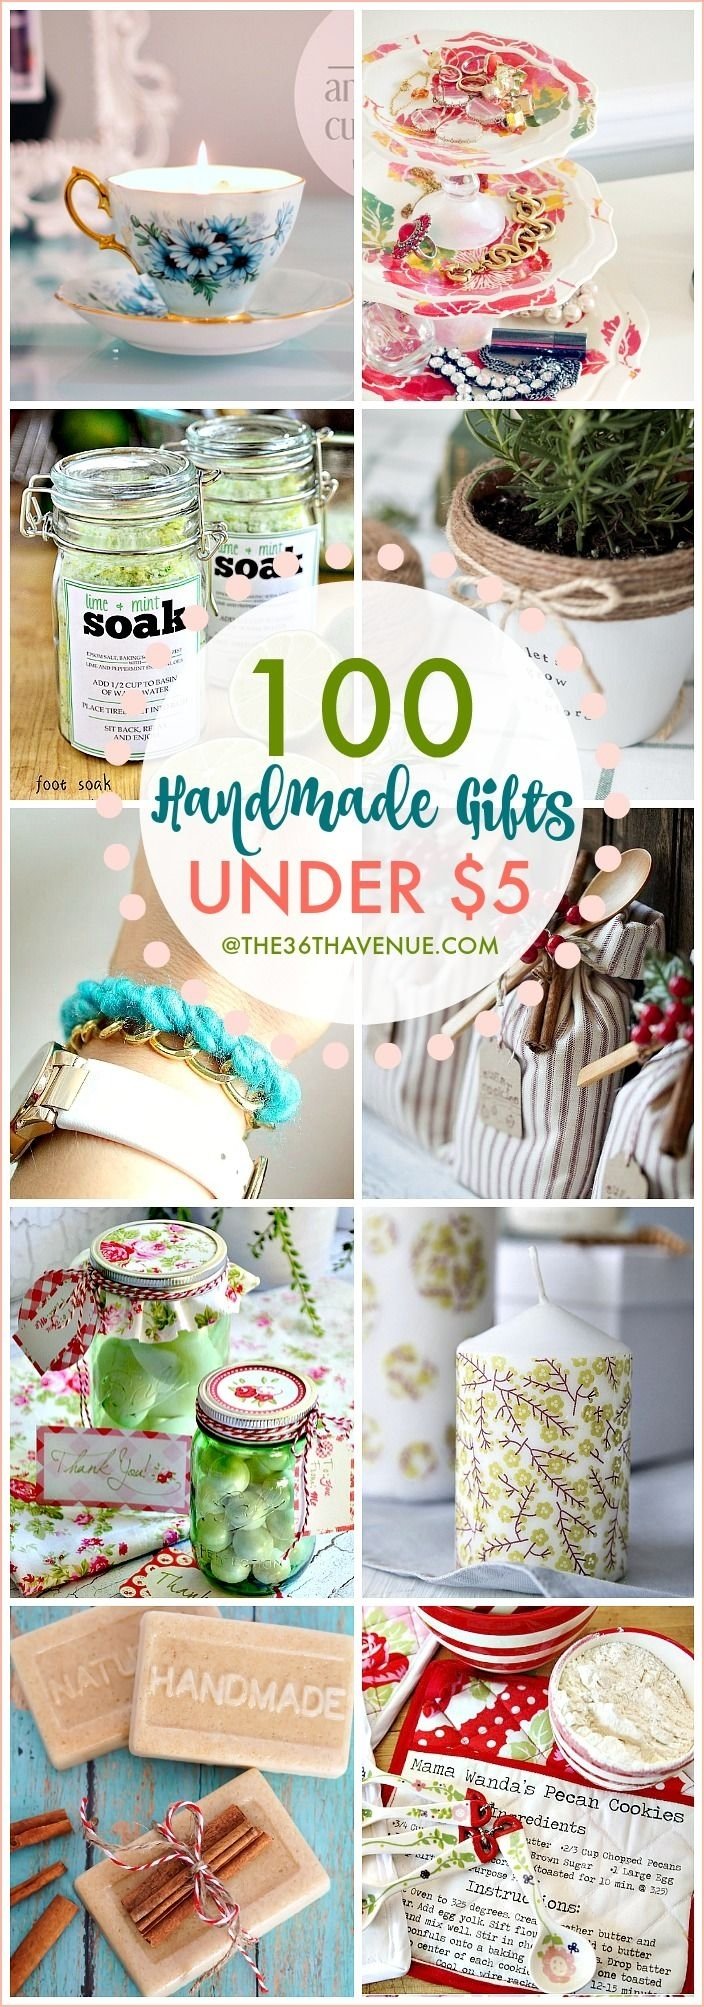 10 Fantastic Best Homemade Christmas Gift Ideas 51 best diy gift ideas images on pinterest diy presents gift 3 2022